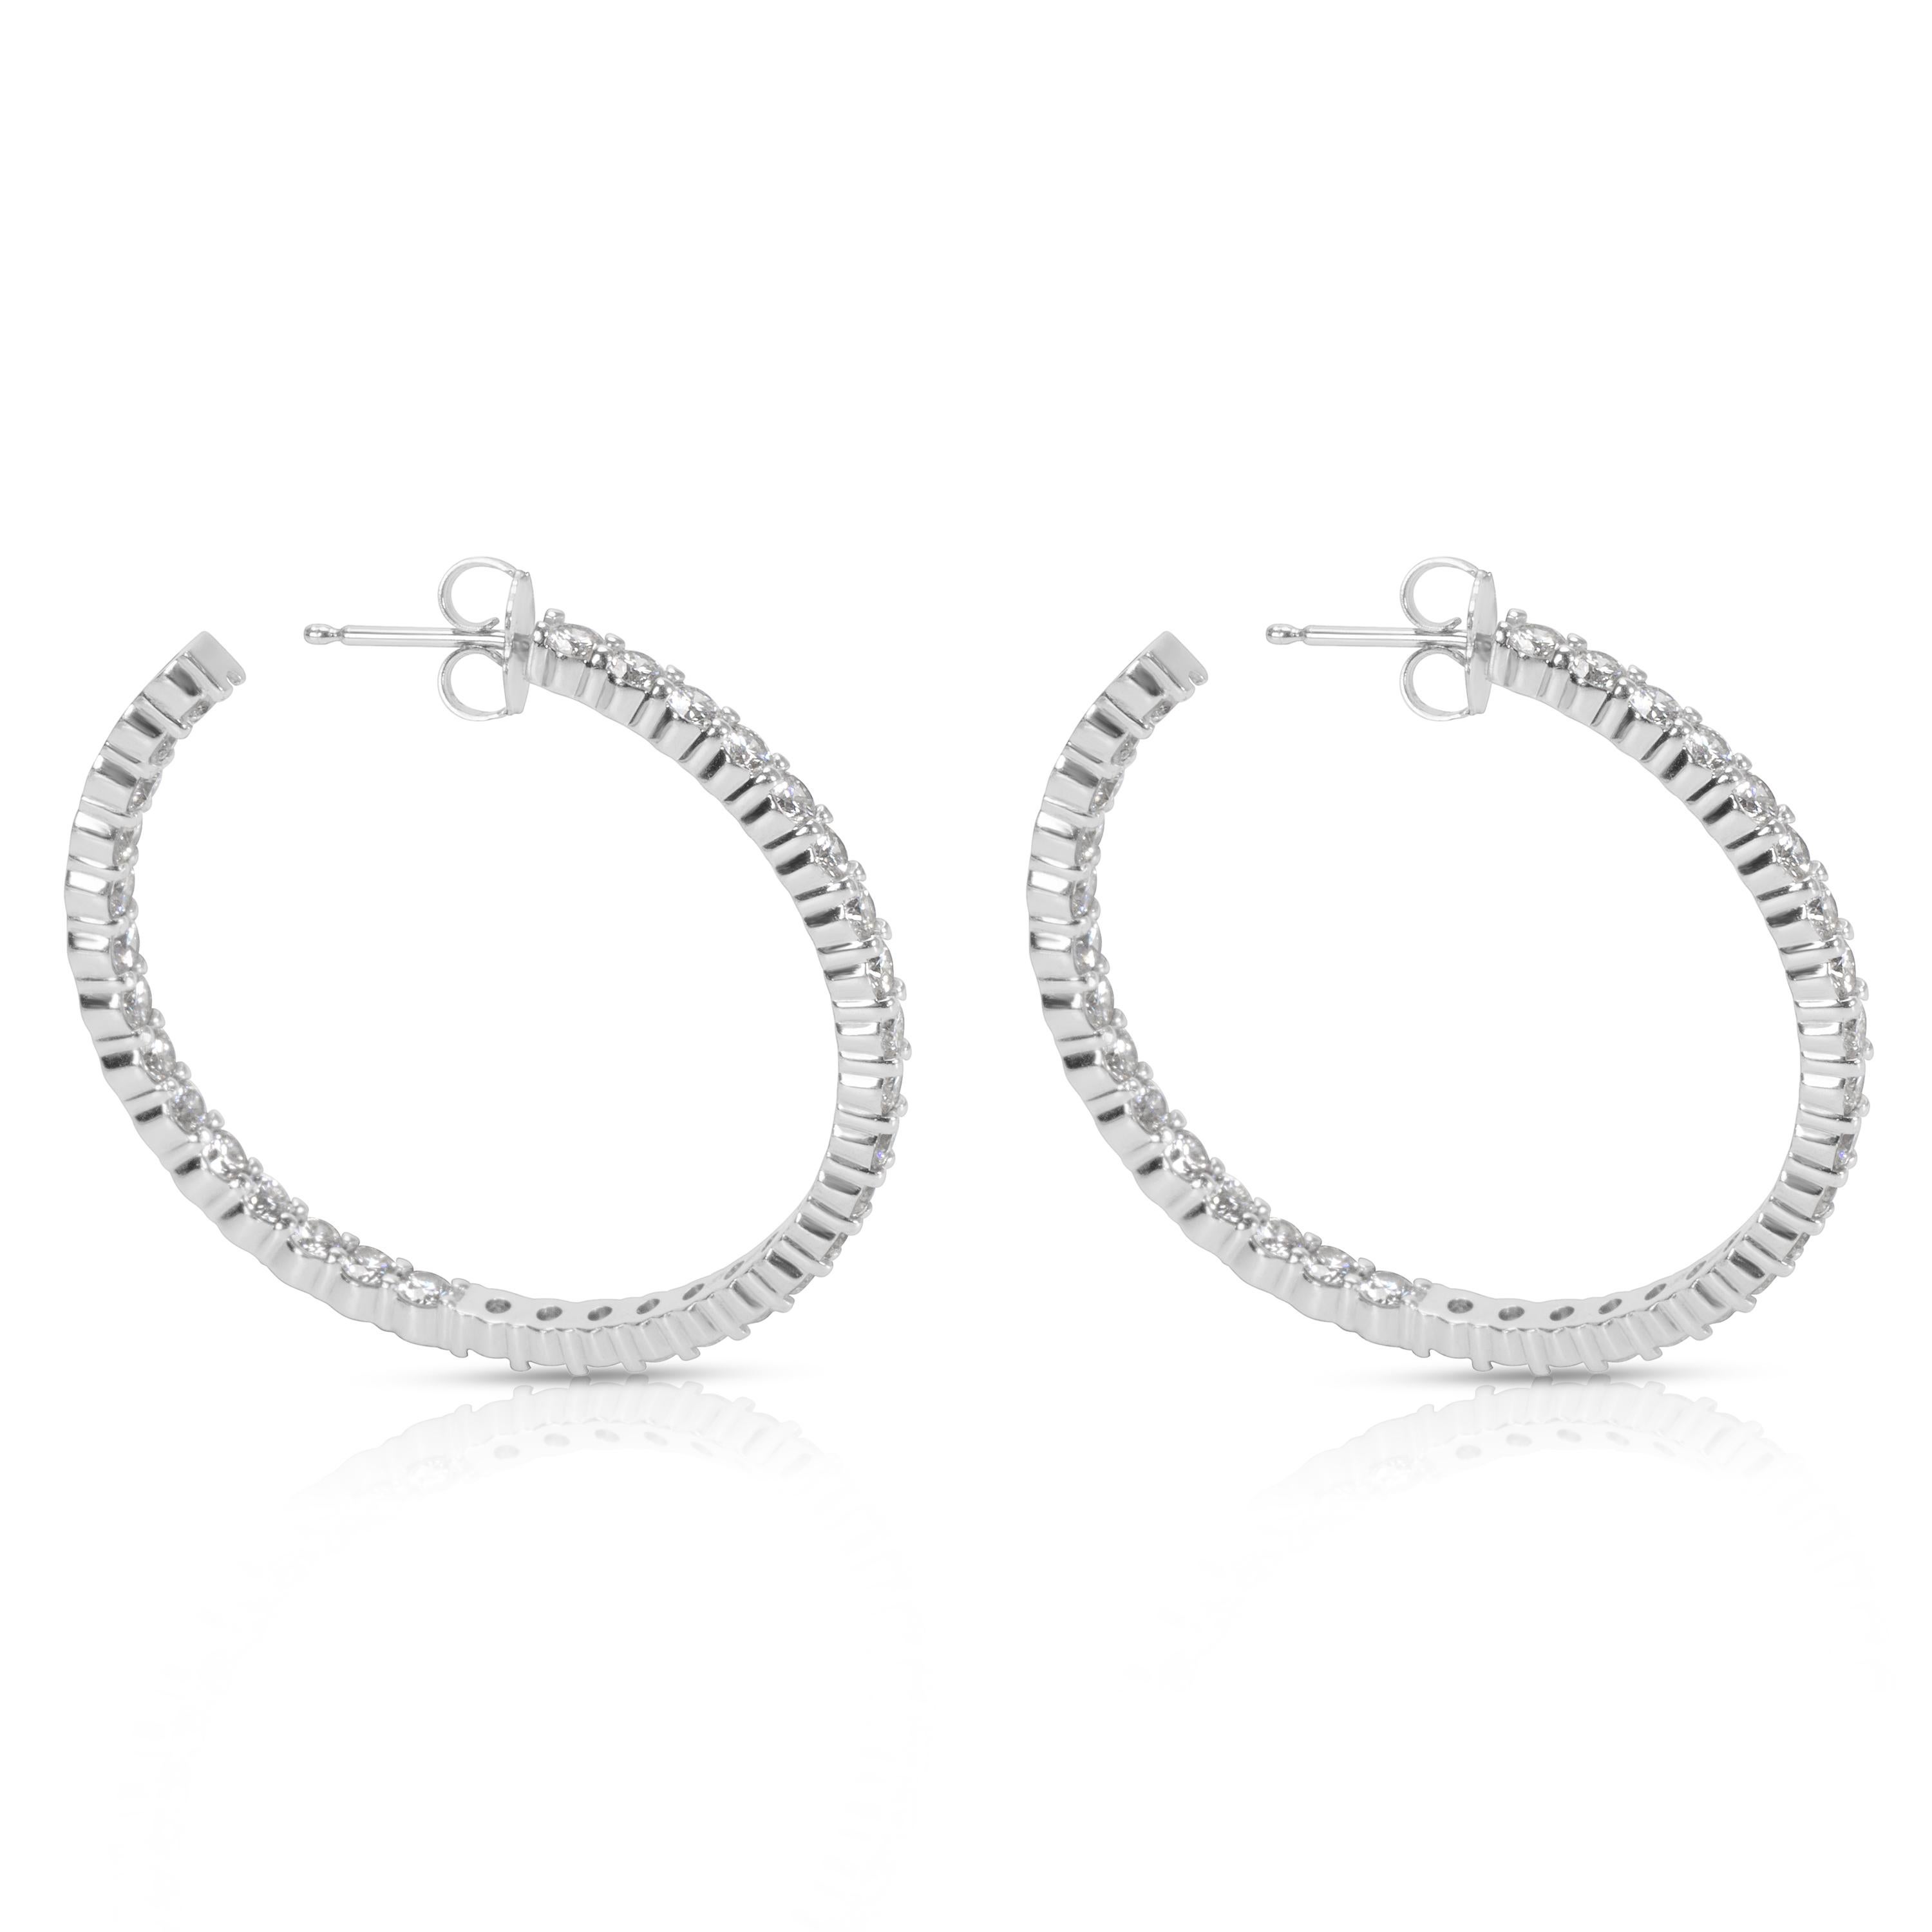 Round Cut Diamond Hoop Earrings in 14 Karat White Gold 5.44 Carat